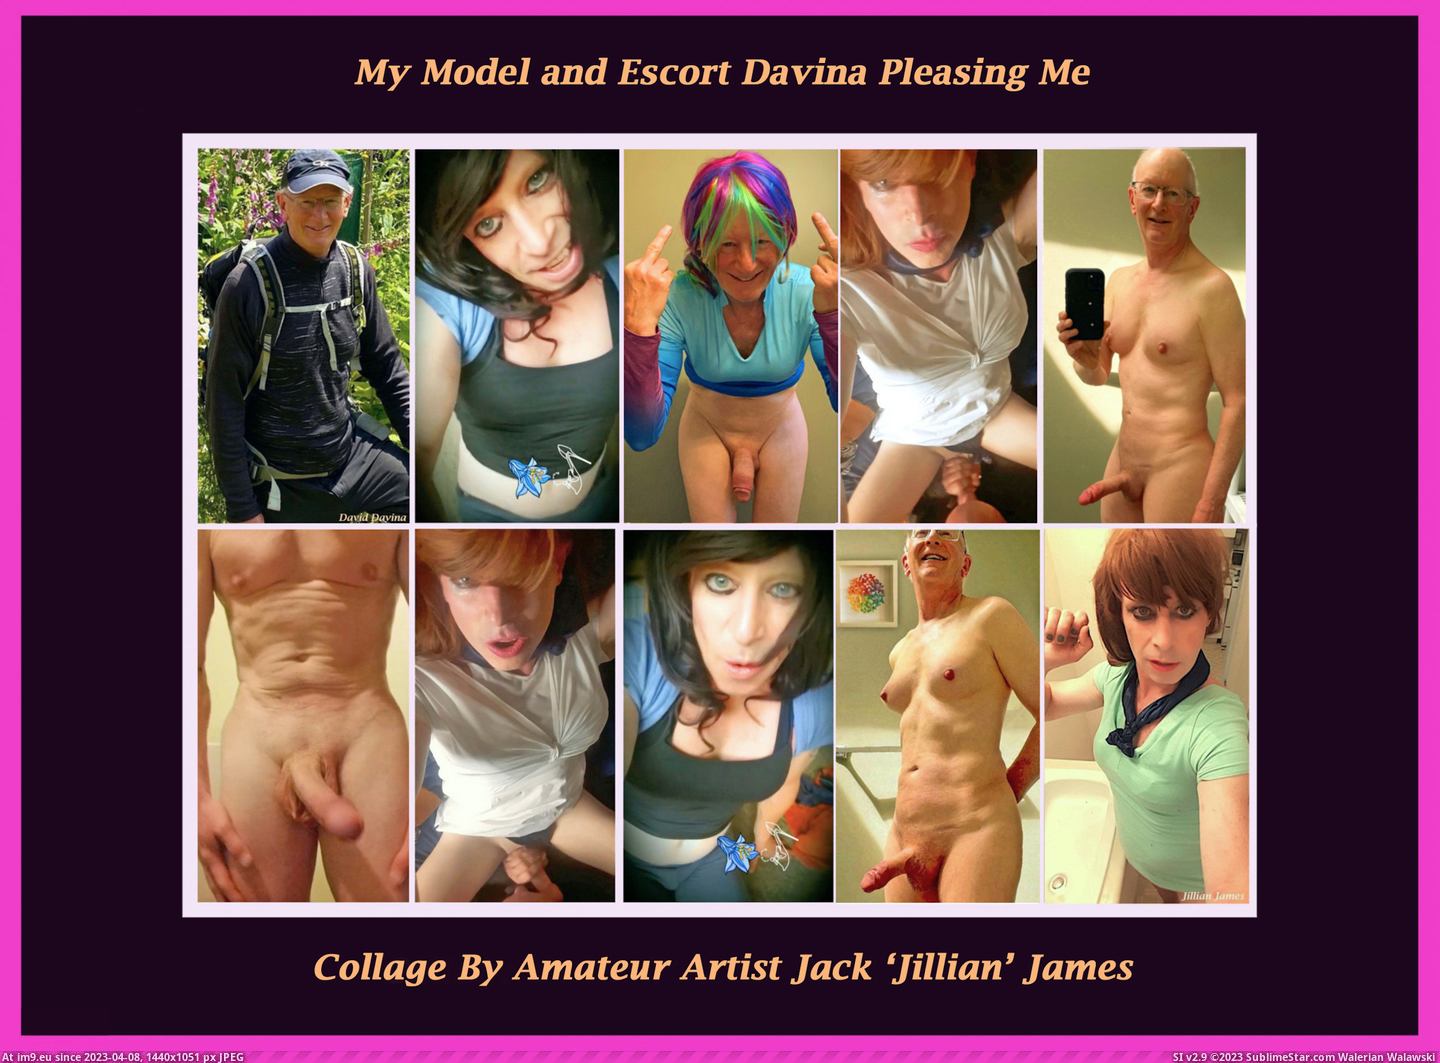 #Gay #Twink #Cock #Clothed #Blowjob #Tranny #Undressed #Unclothed #Models #Bisexual Clothed Unclothed Amateur Couple Davina and Jillian Pic. (Bild von album Instant Upload))